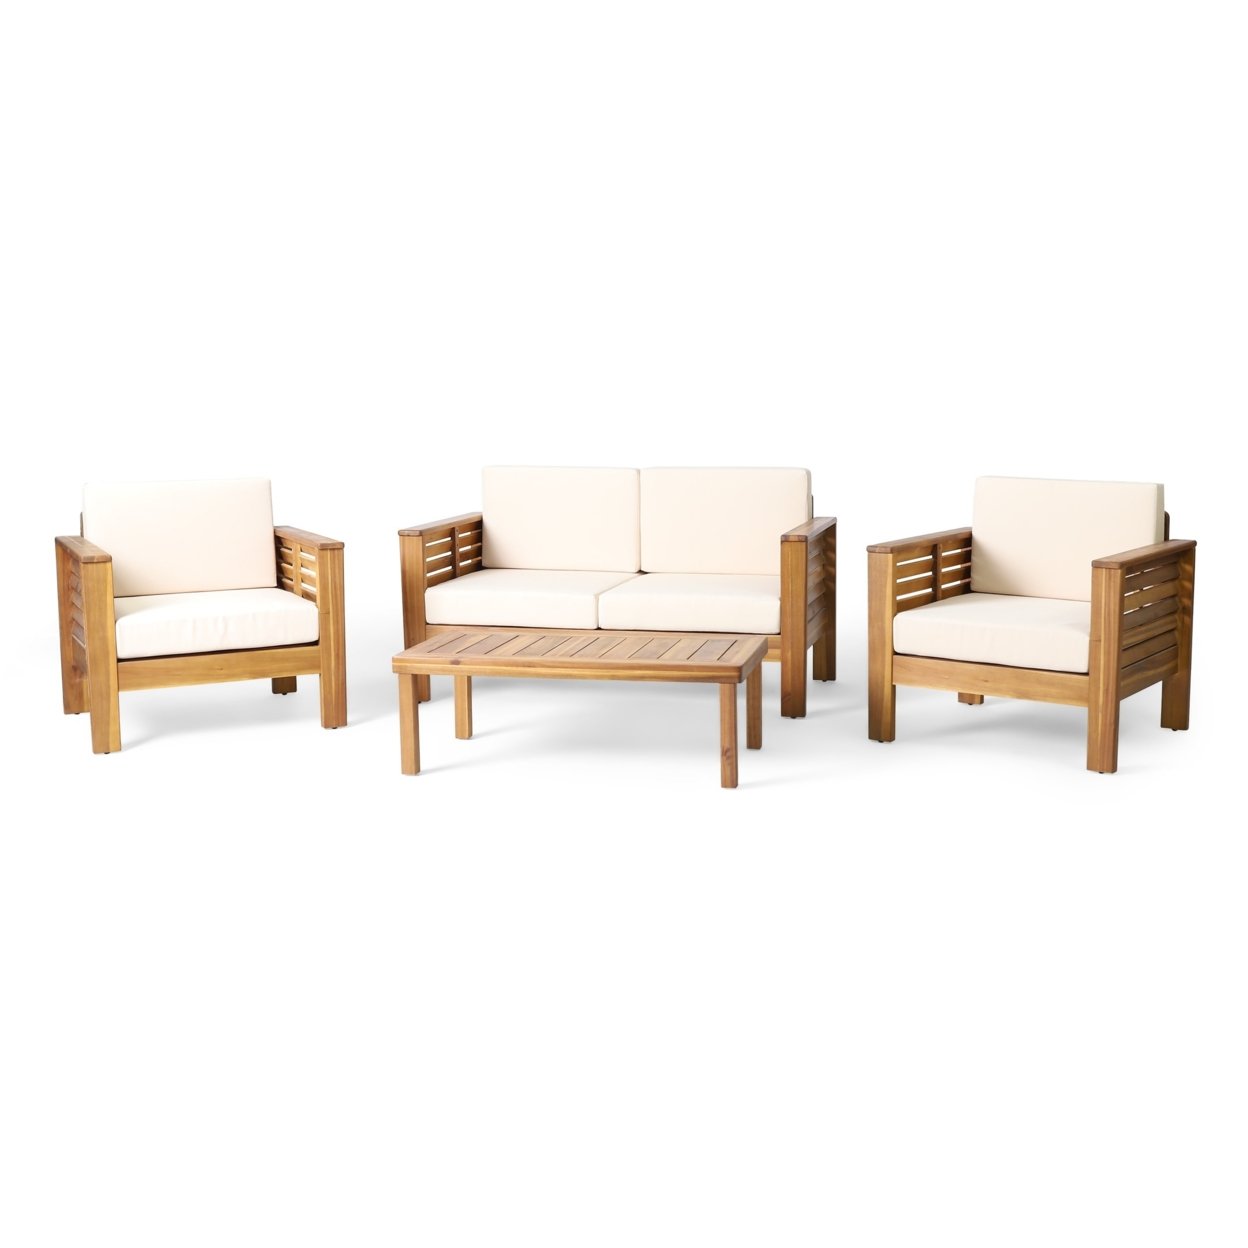 Rabun Outdoor Acacia Wood 4 Seater Chat Set With Cushions - Teak/cream